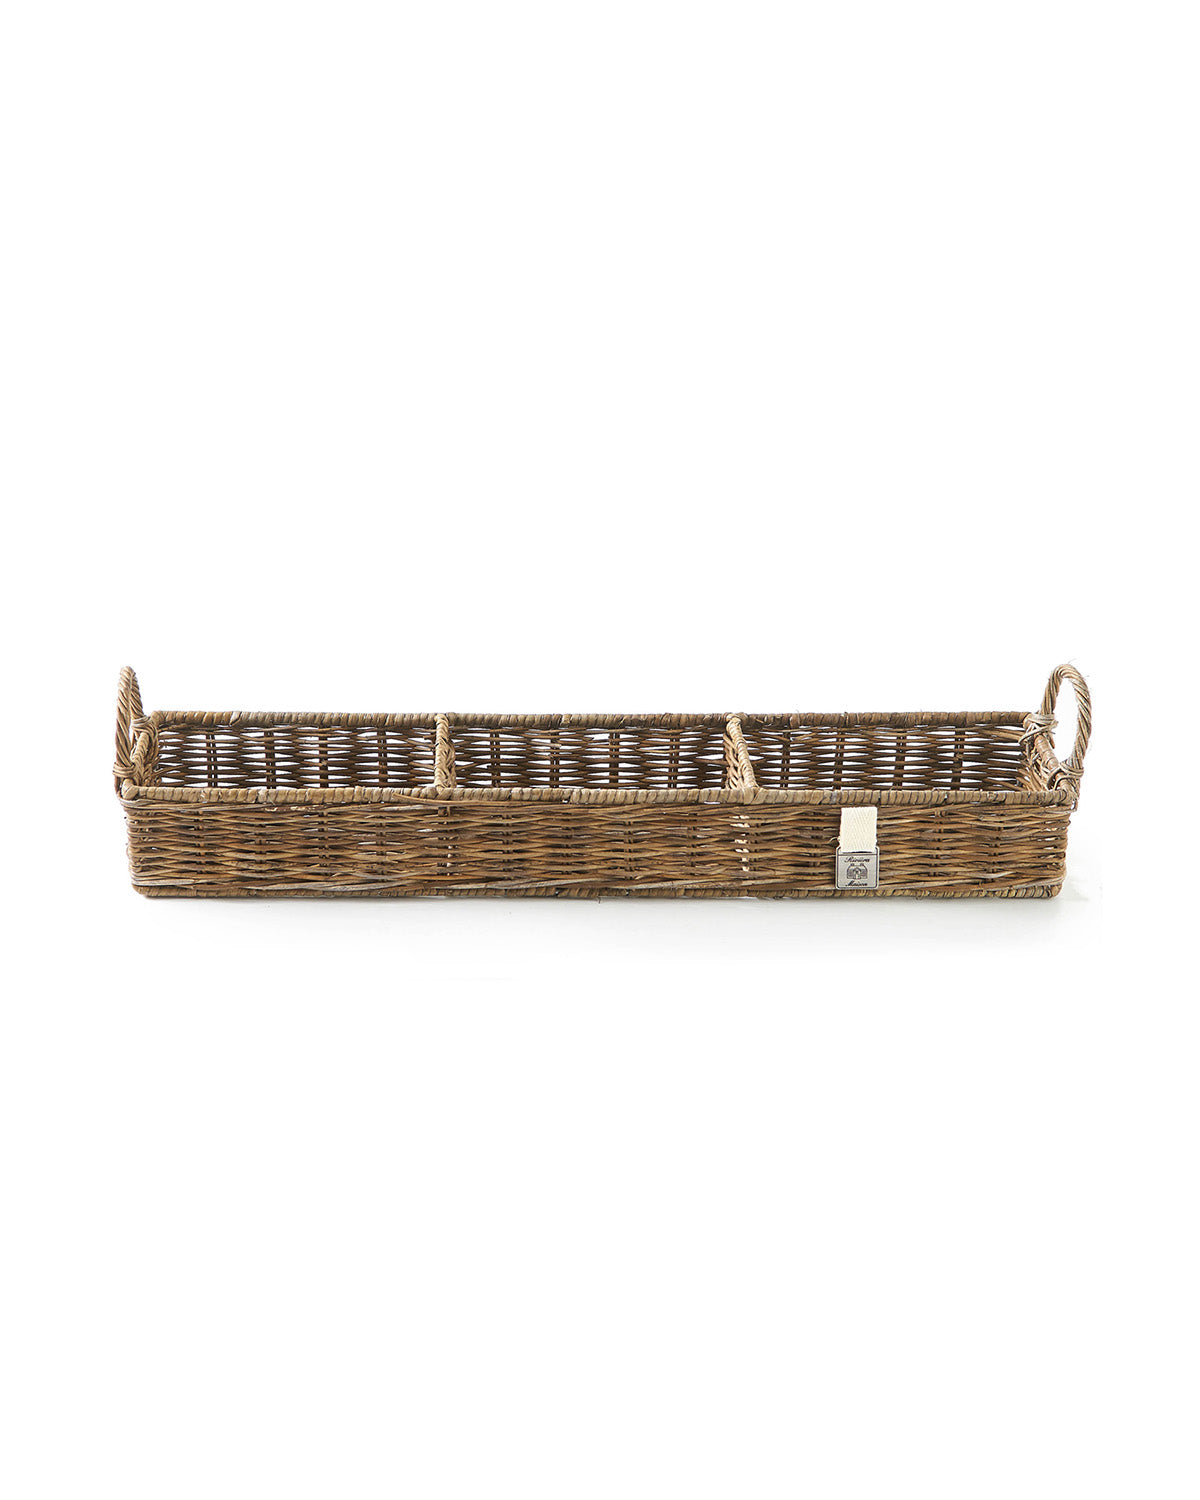 Rectangular reed basket by Riviera Maison